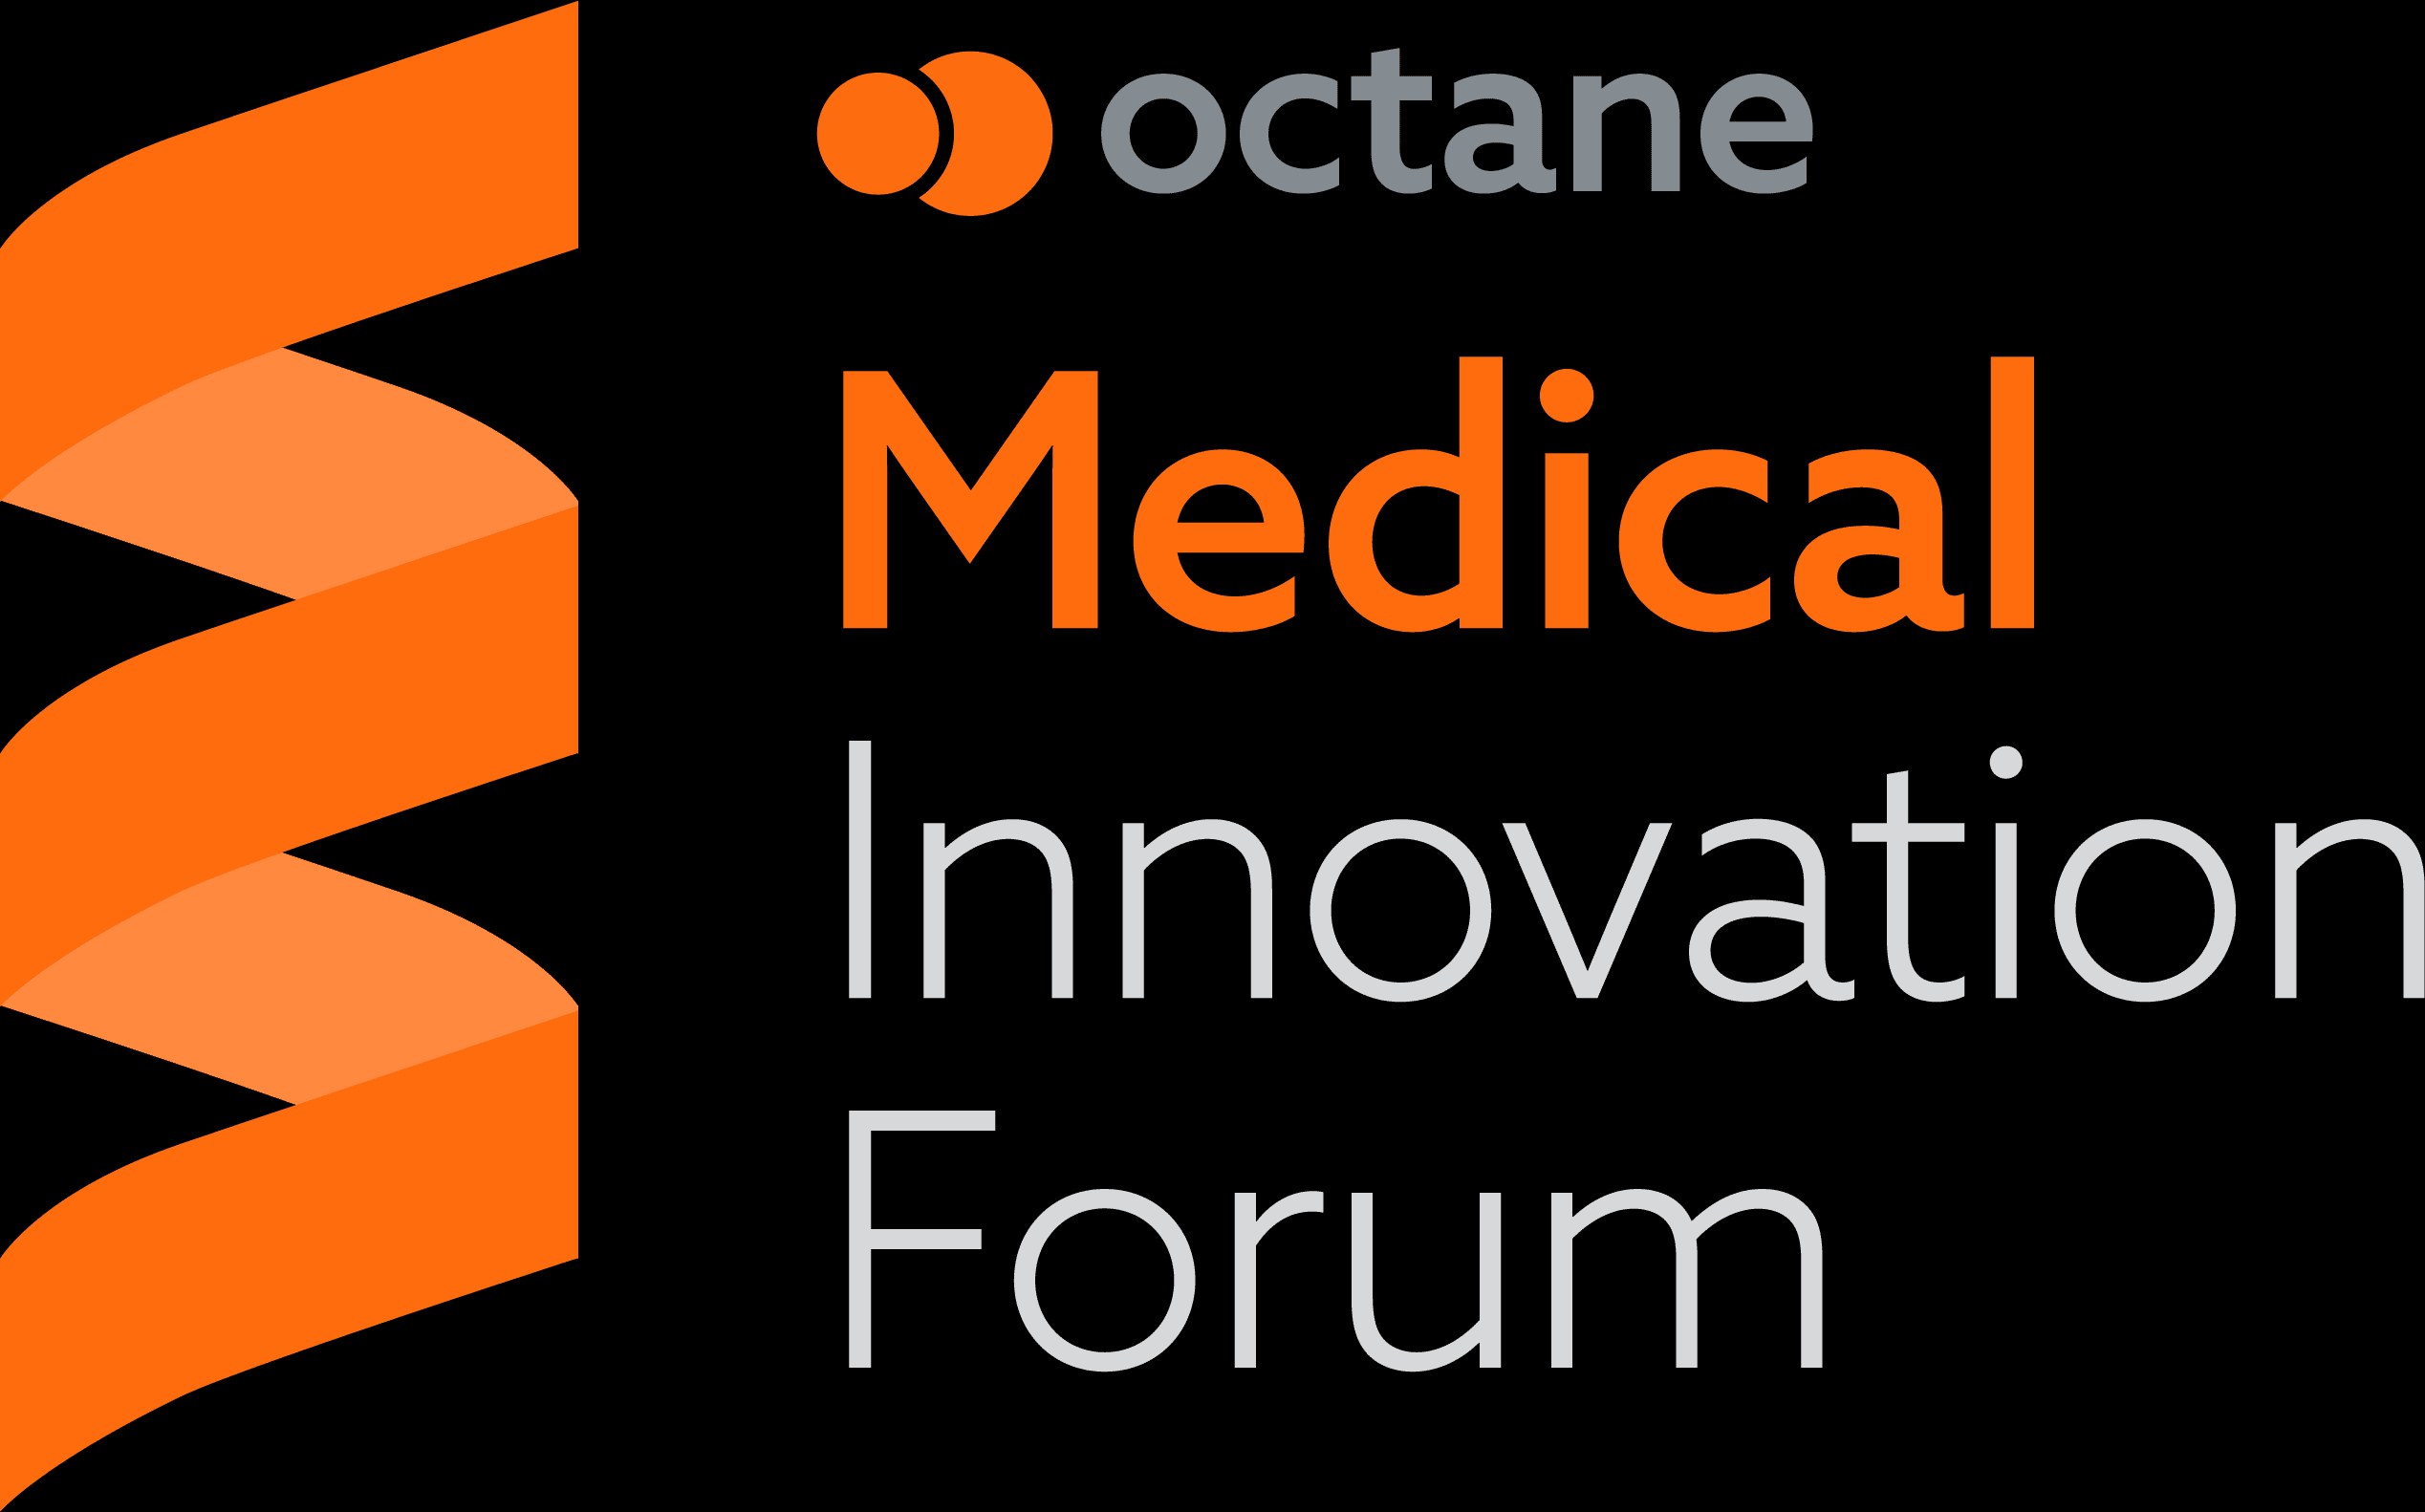 Octane Medical Innovation Forum